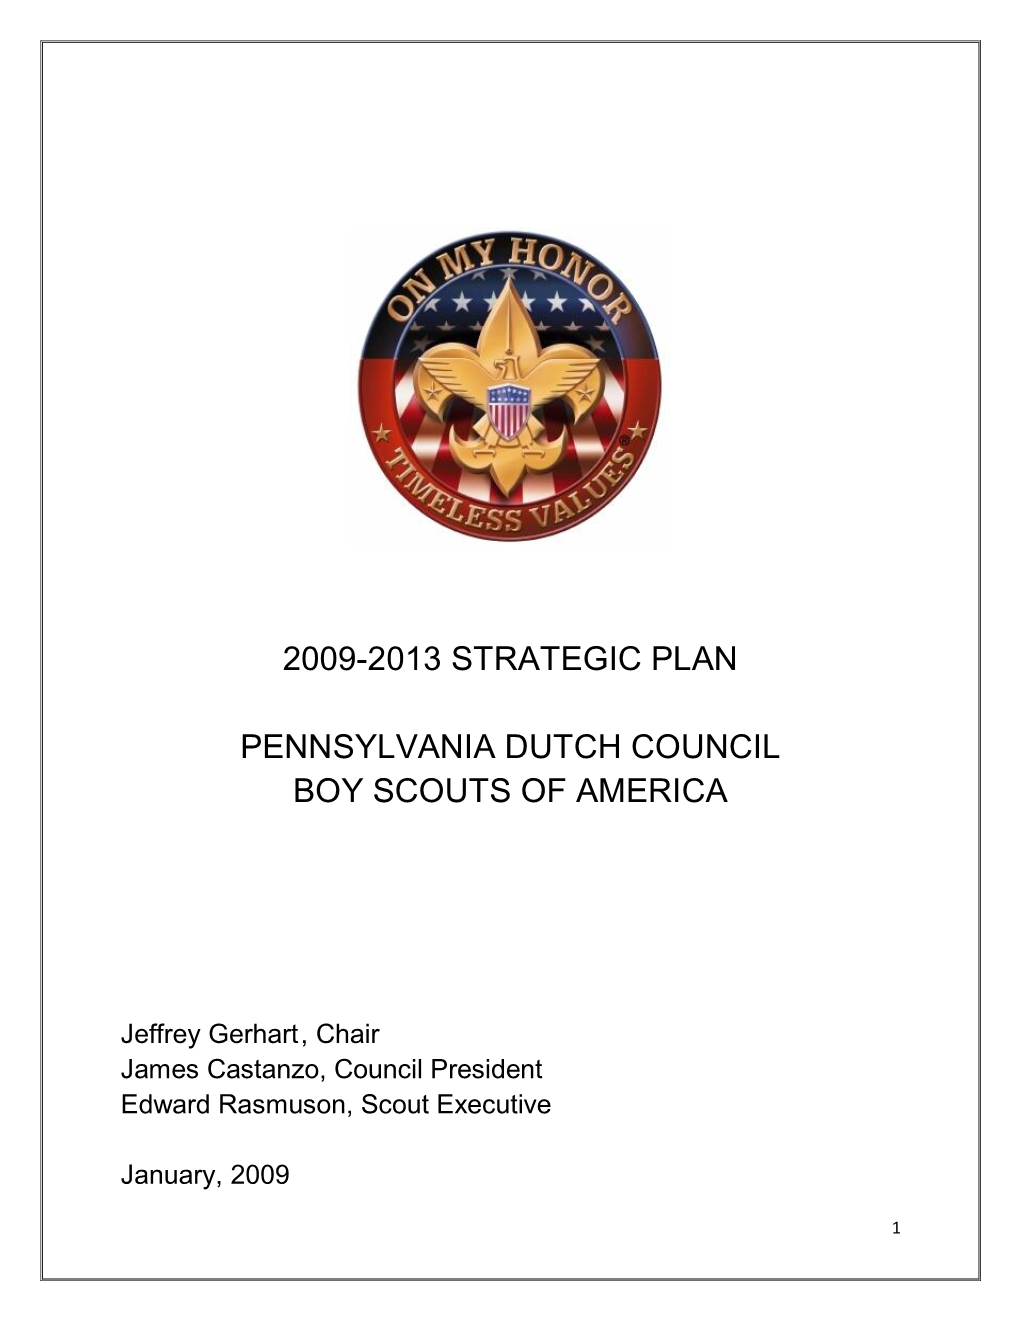 2009-2013 Strategic Plan Pennsylvania Dutch Council Boy Scouts of America